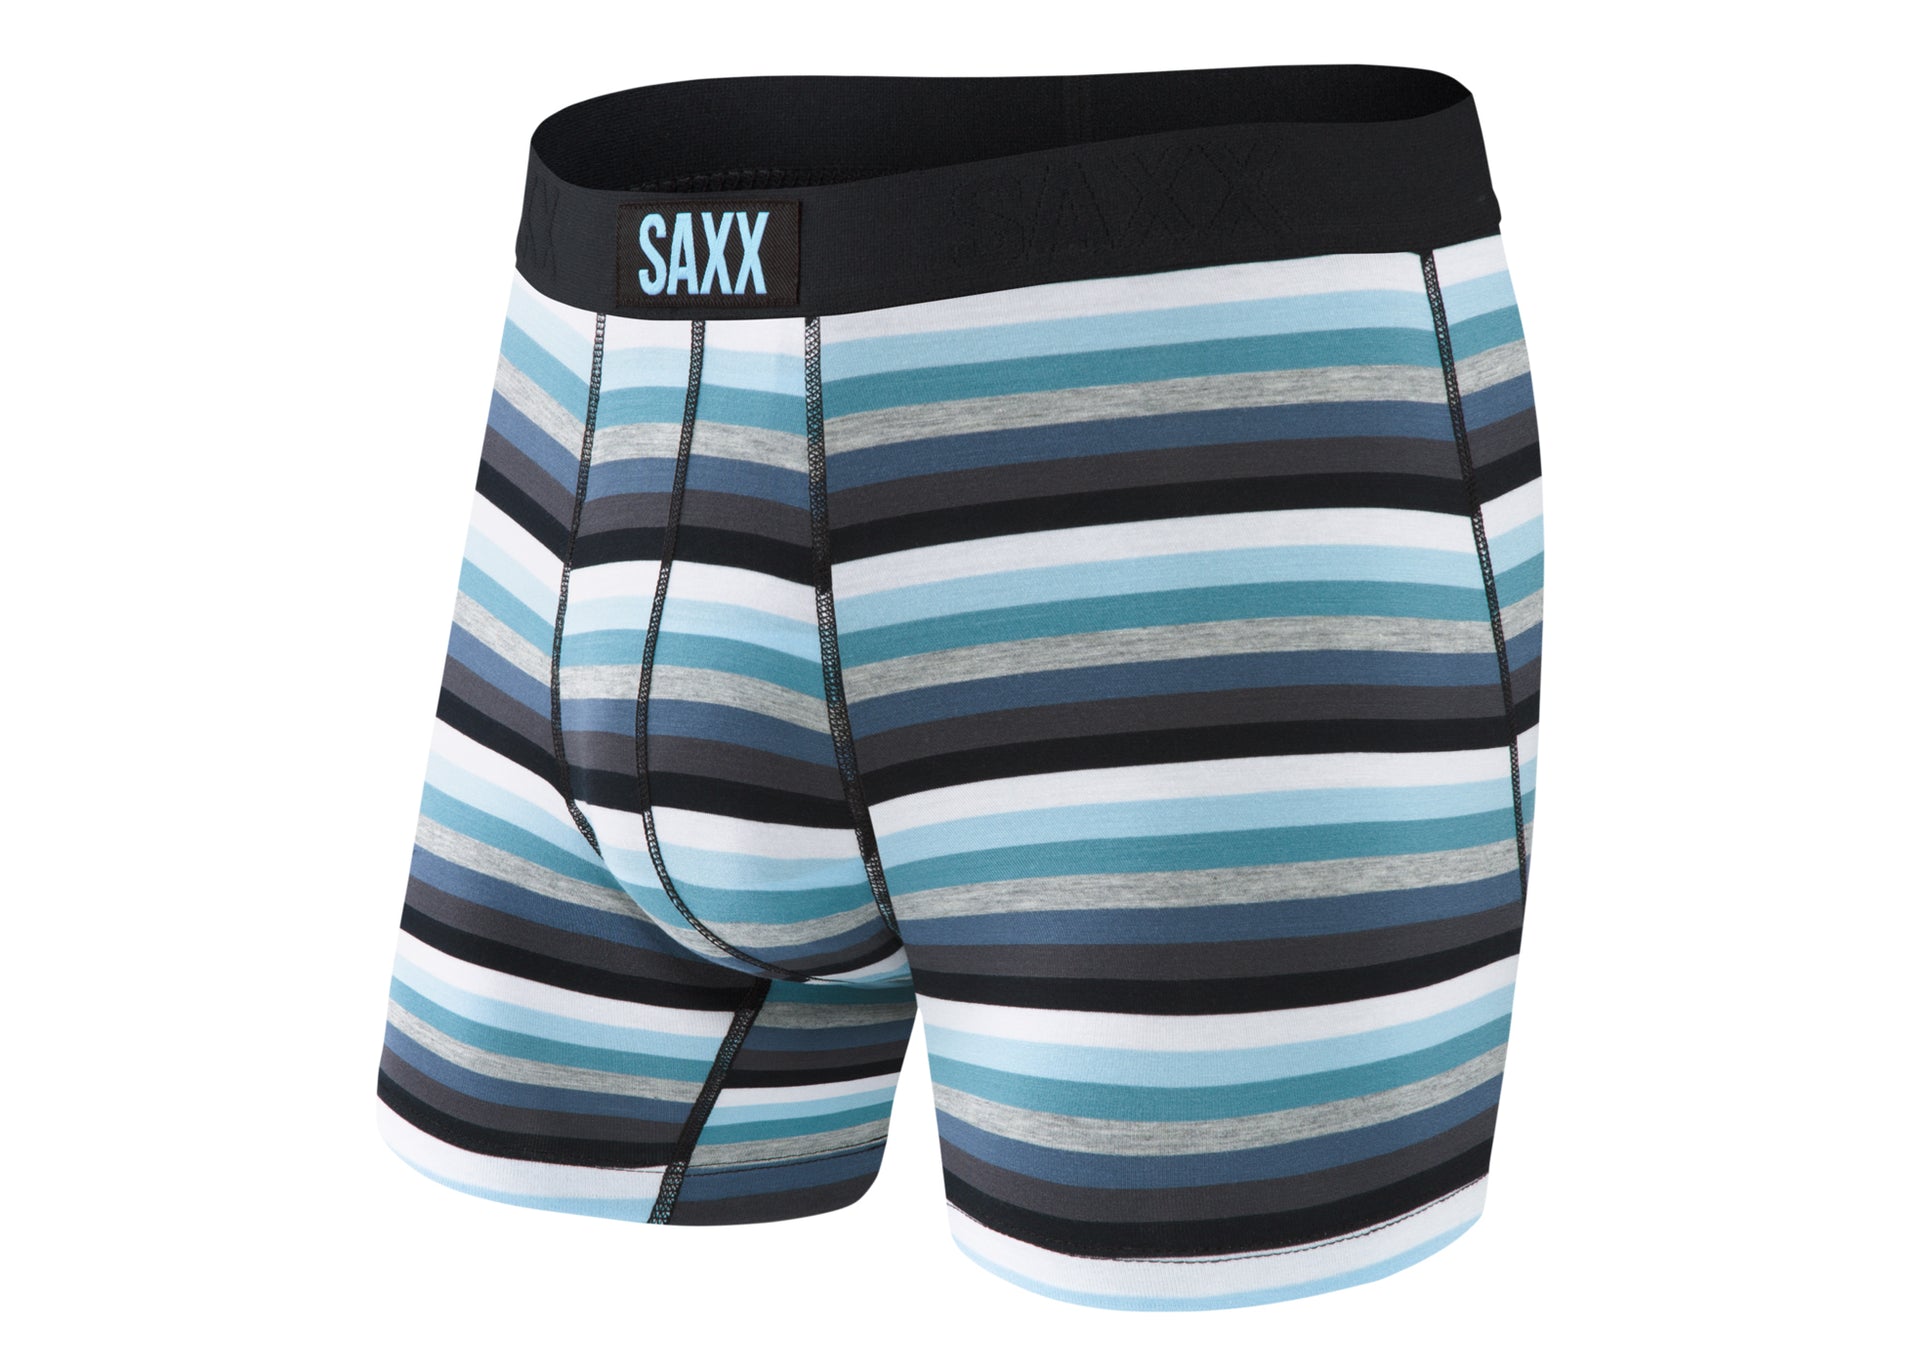 Boutique Option-Saxx Floral Underwear in Blue color (Saxx-Sxbm35-Ism)